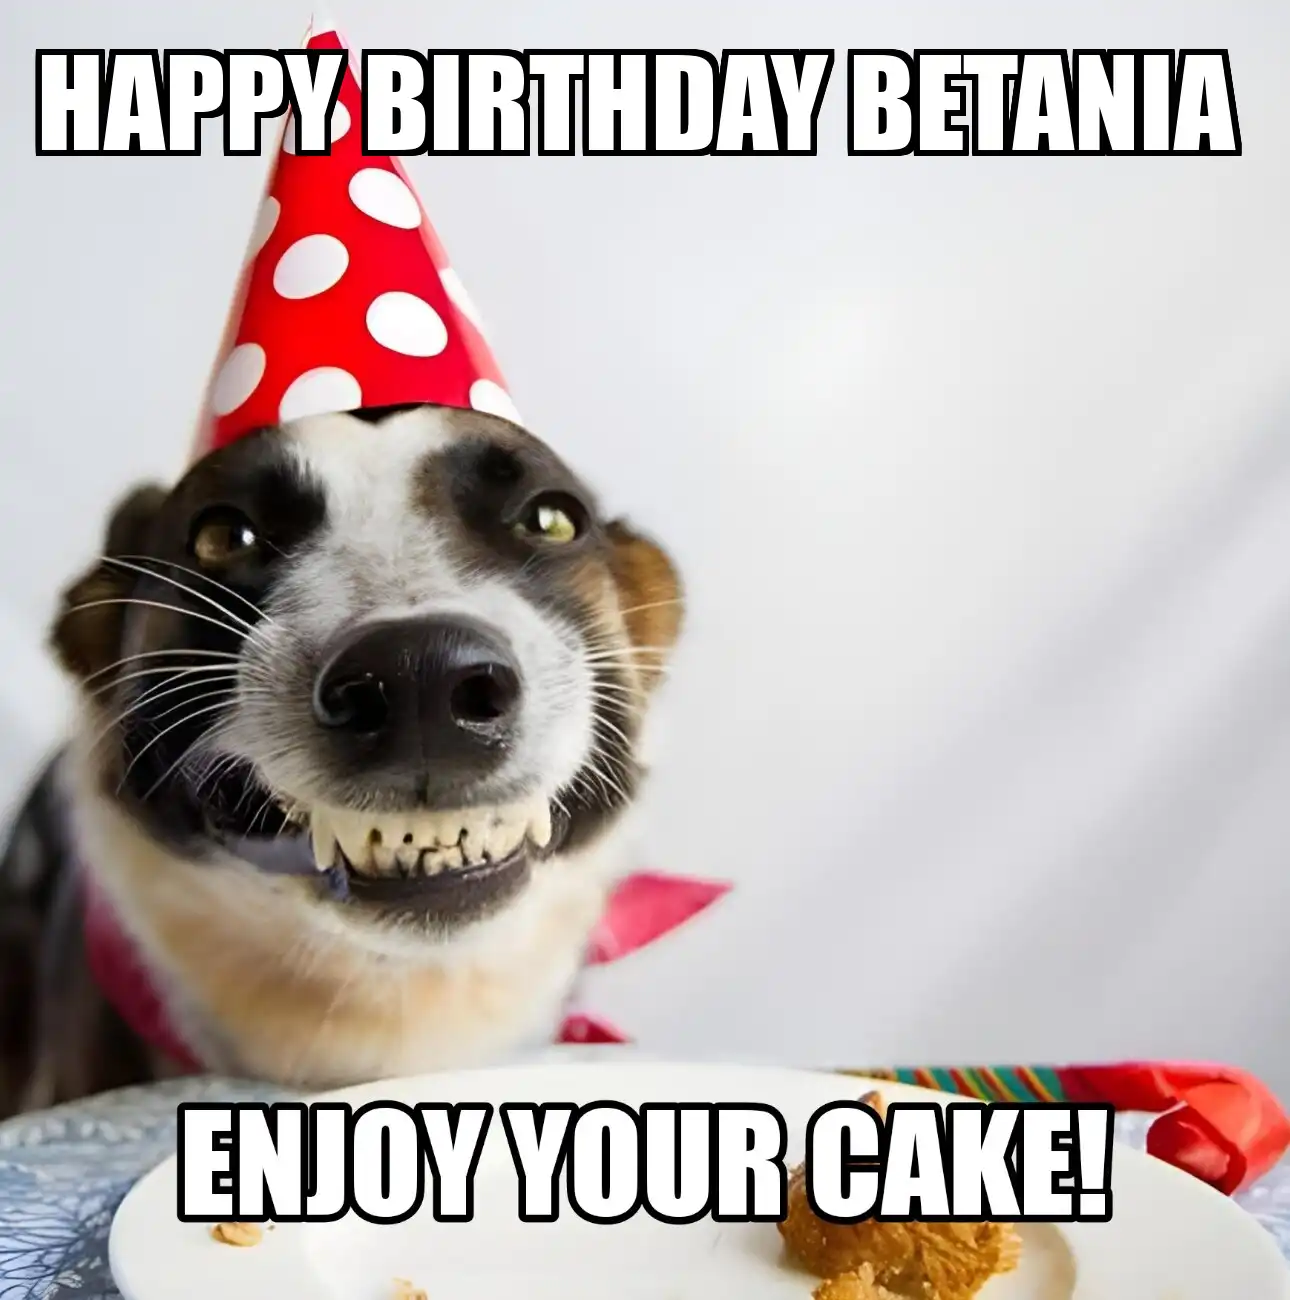 Happy Birthday Betania Enjoy Your Cake Dog Meme